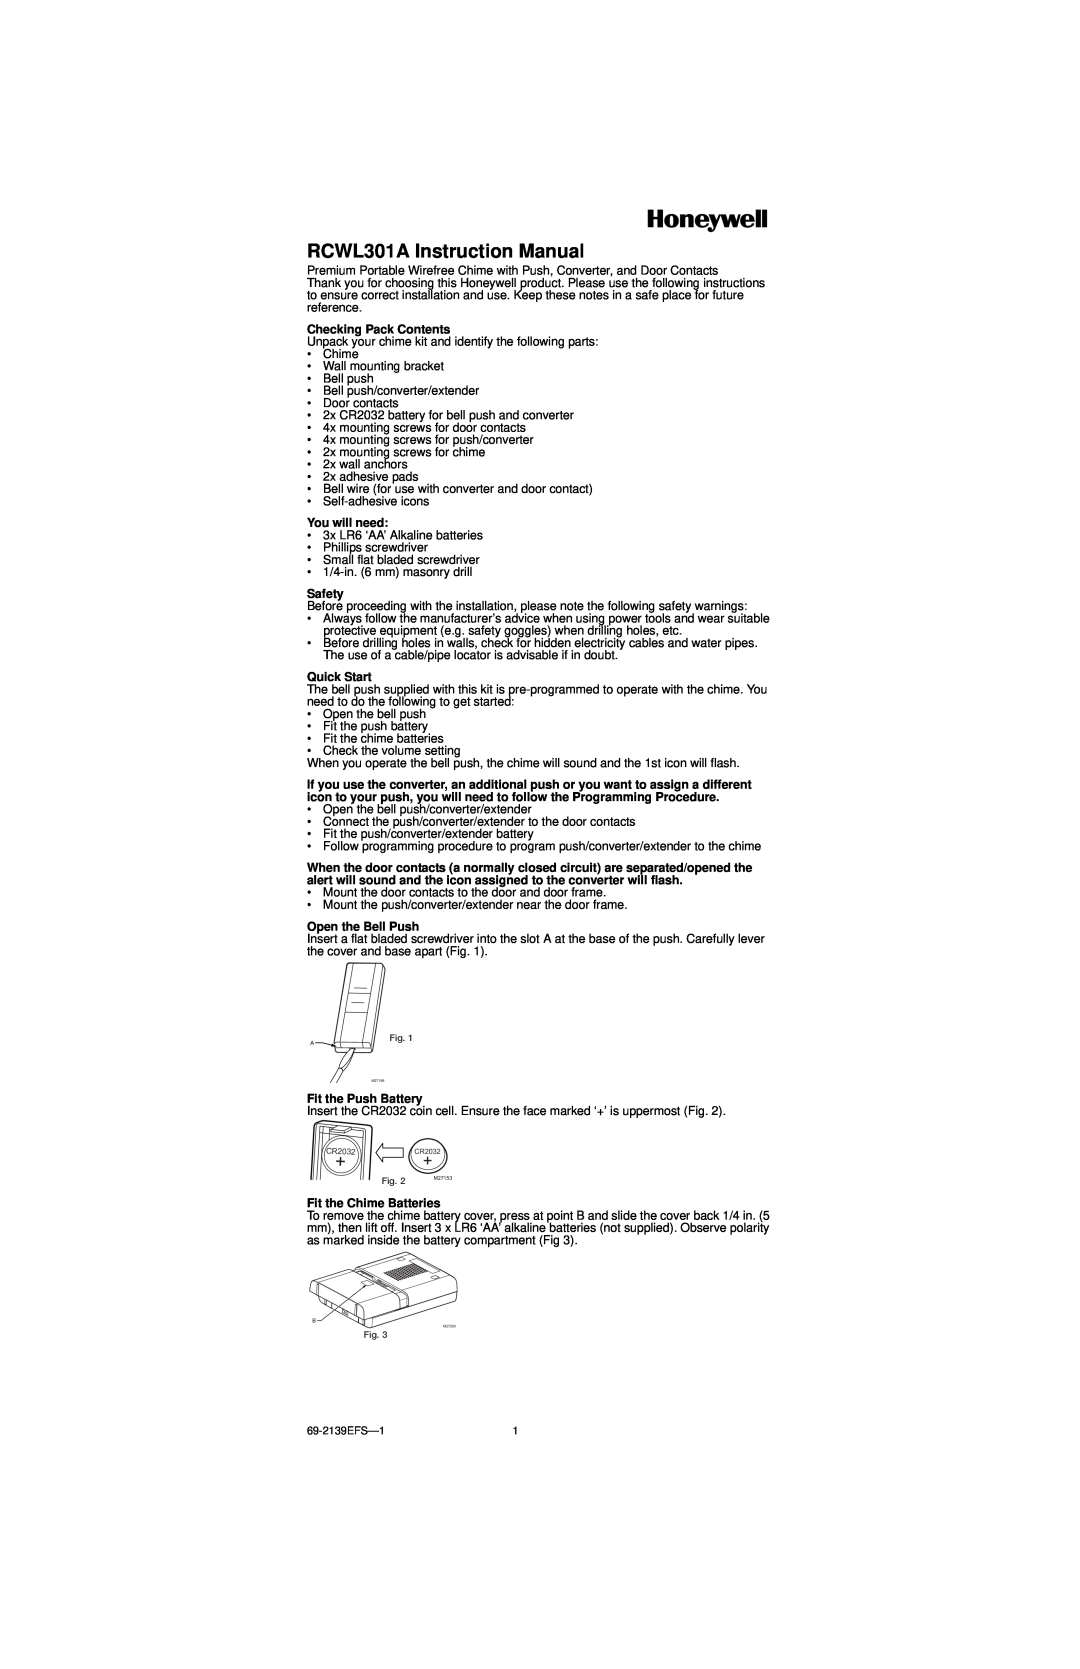 Honeywell RCWL301A instruction manual 